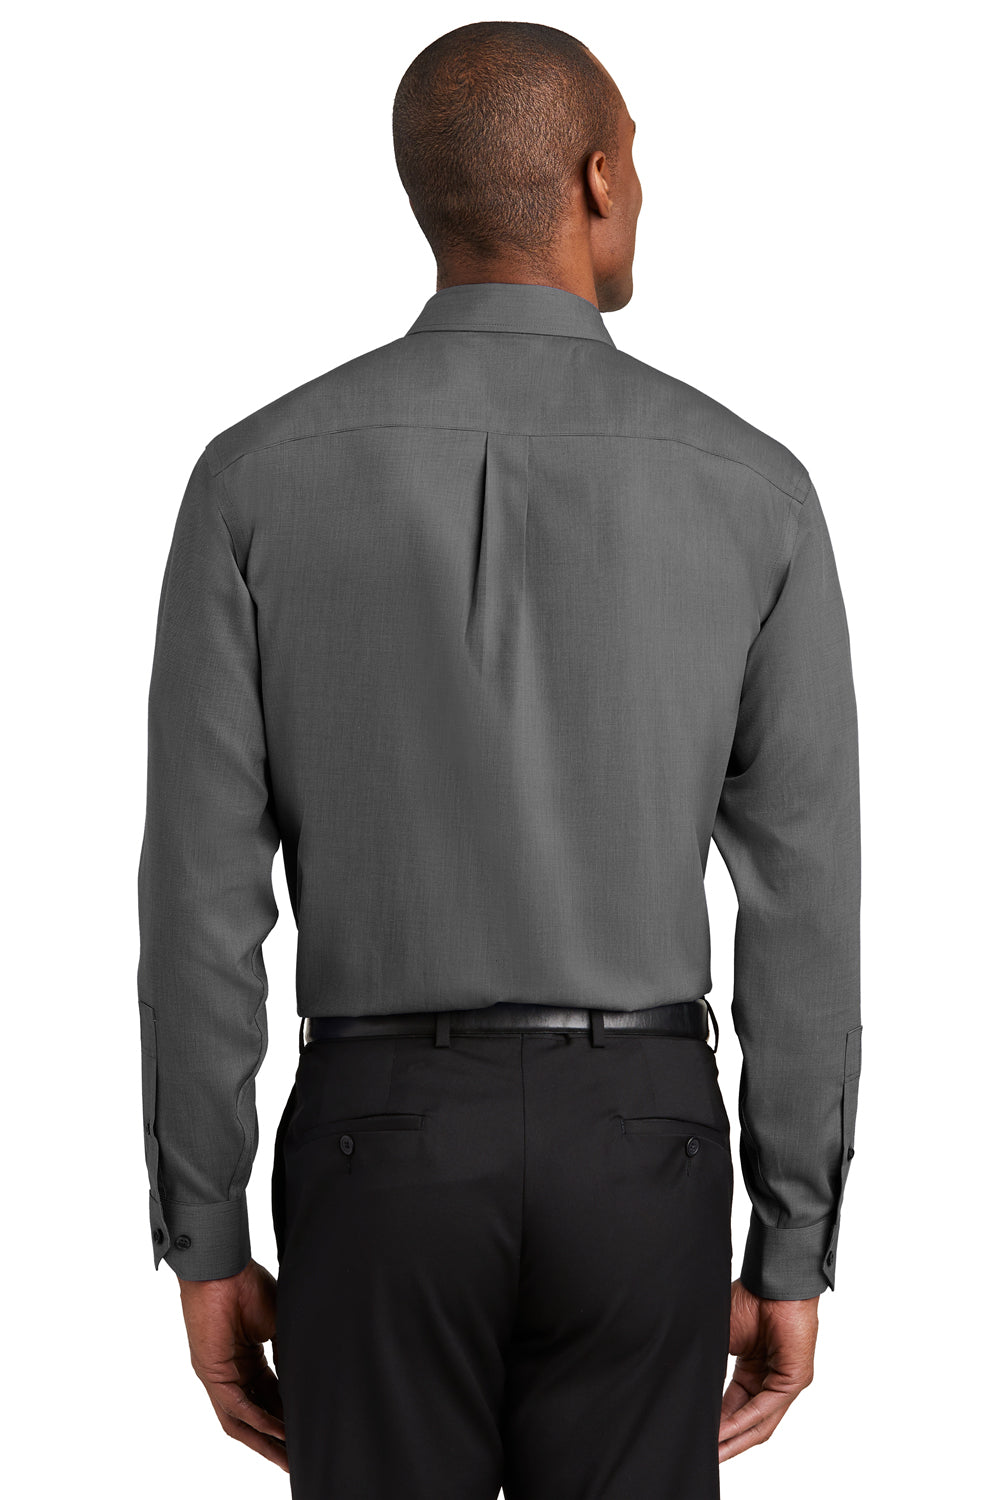 Red House RH370 Mens Nailhead Wrinkle Resistant Long Sleeve Button Down Shirt w/ Pocket Black Back